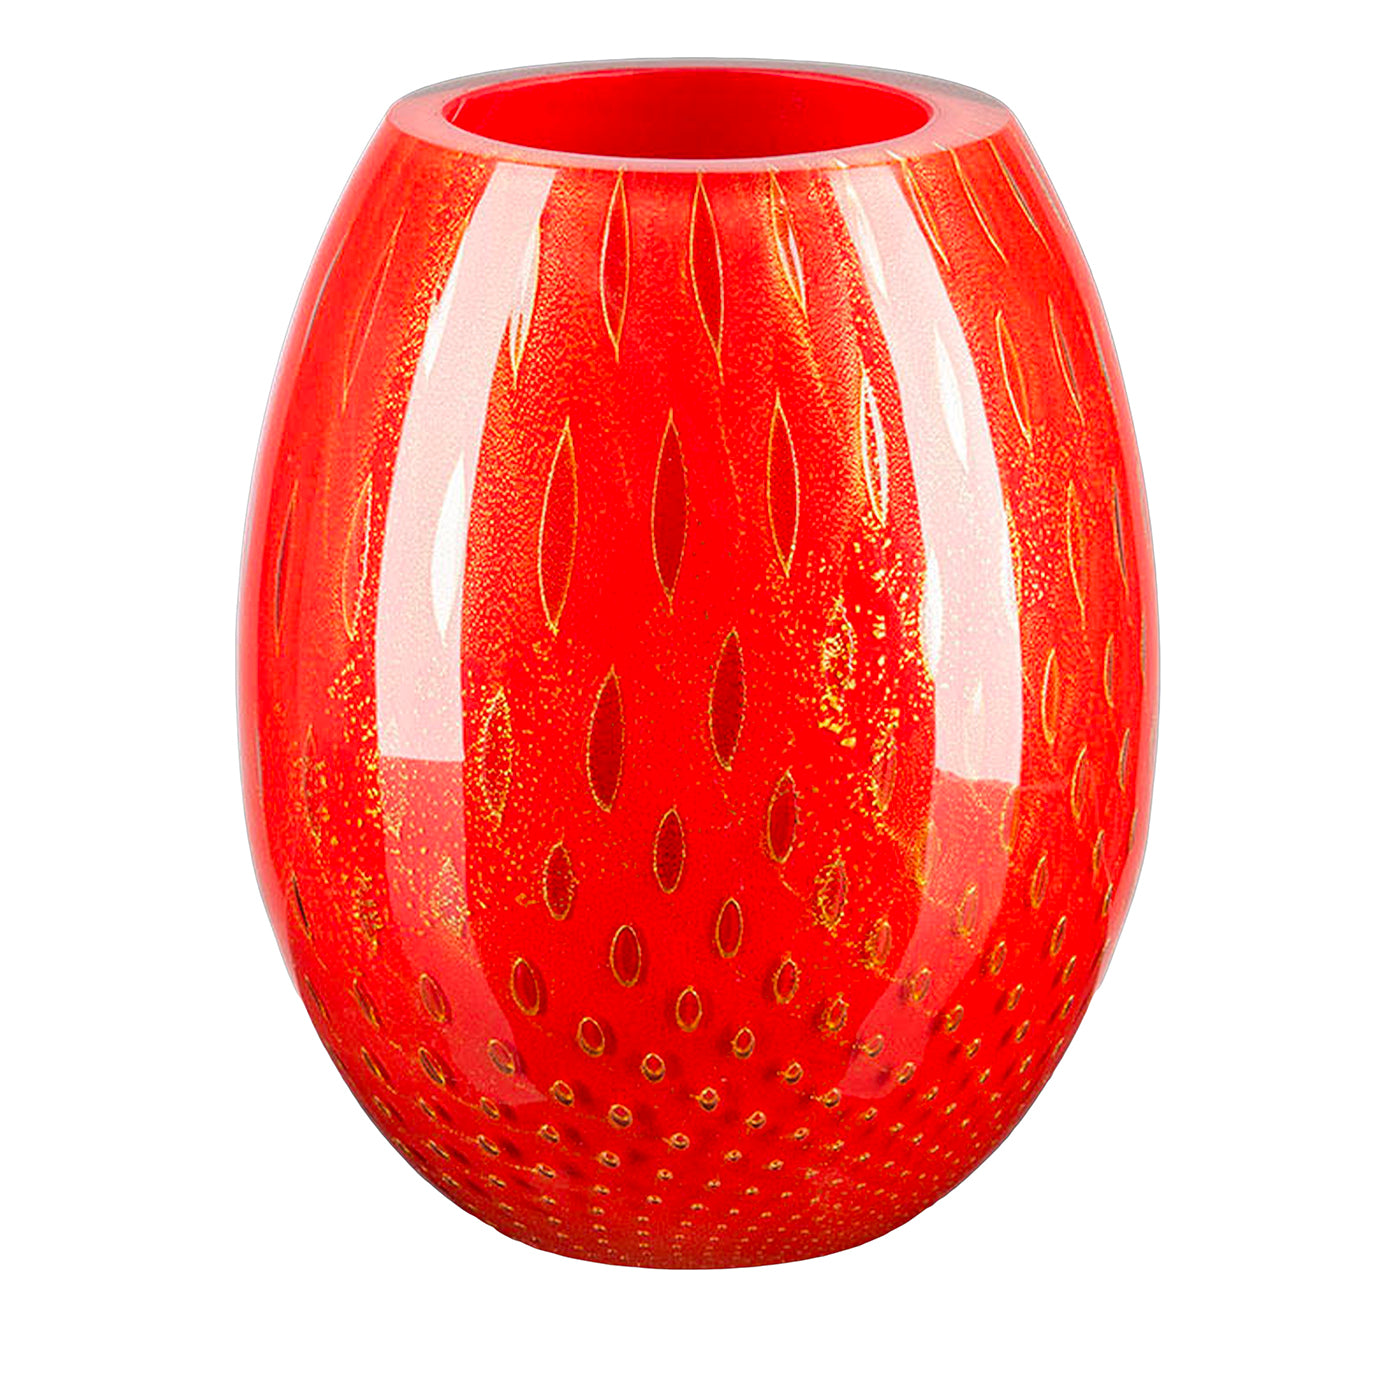 Mocenigo Oval Rote Vase - Hauptansicht